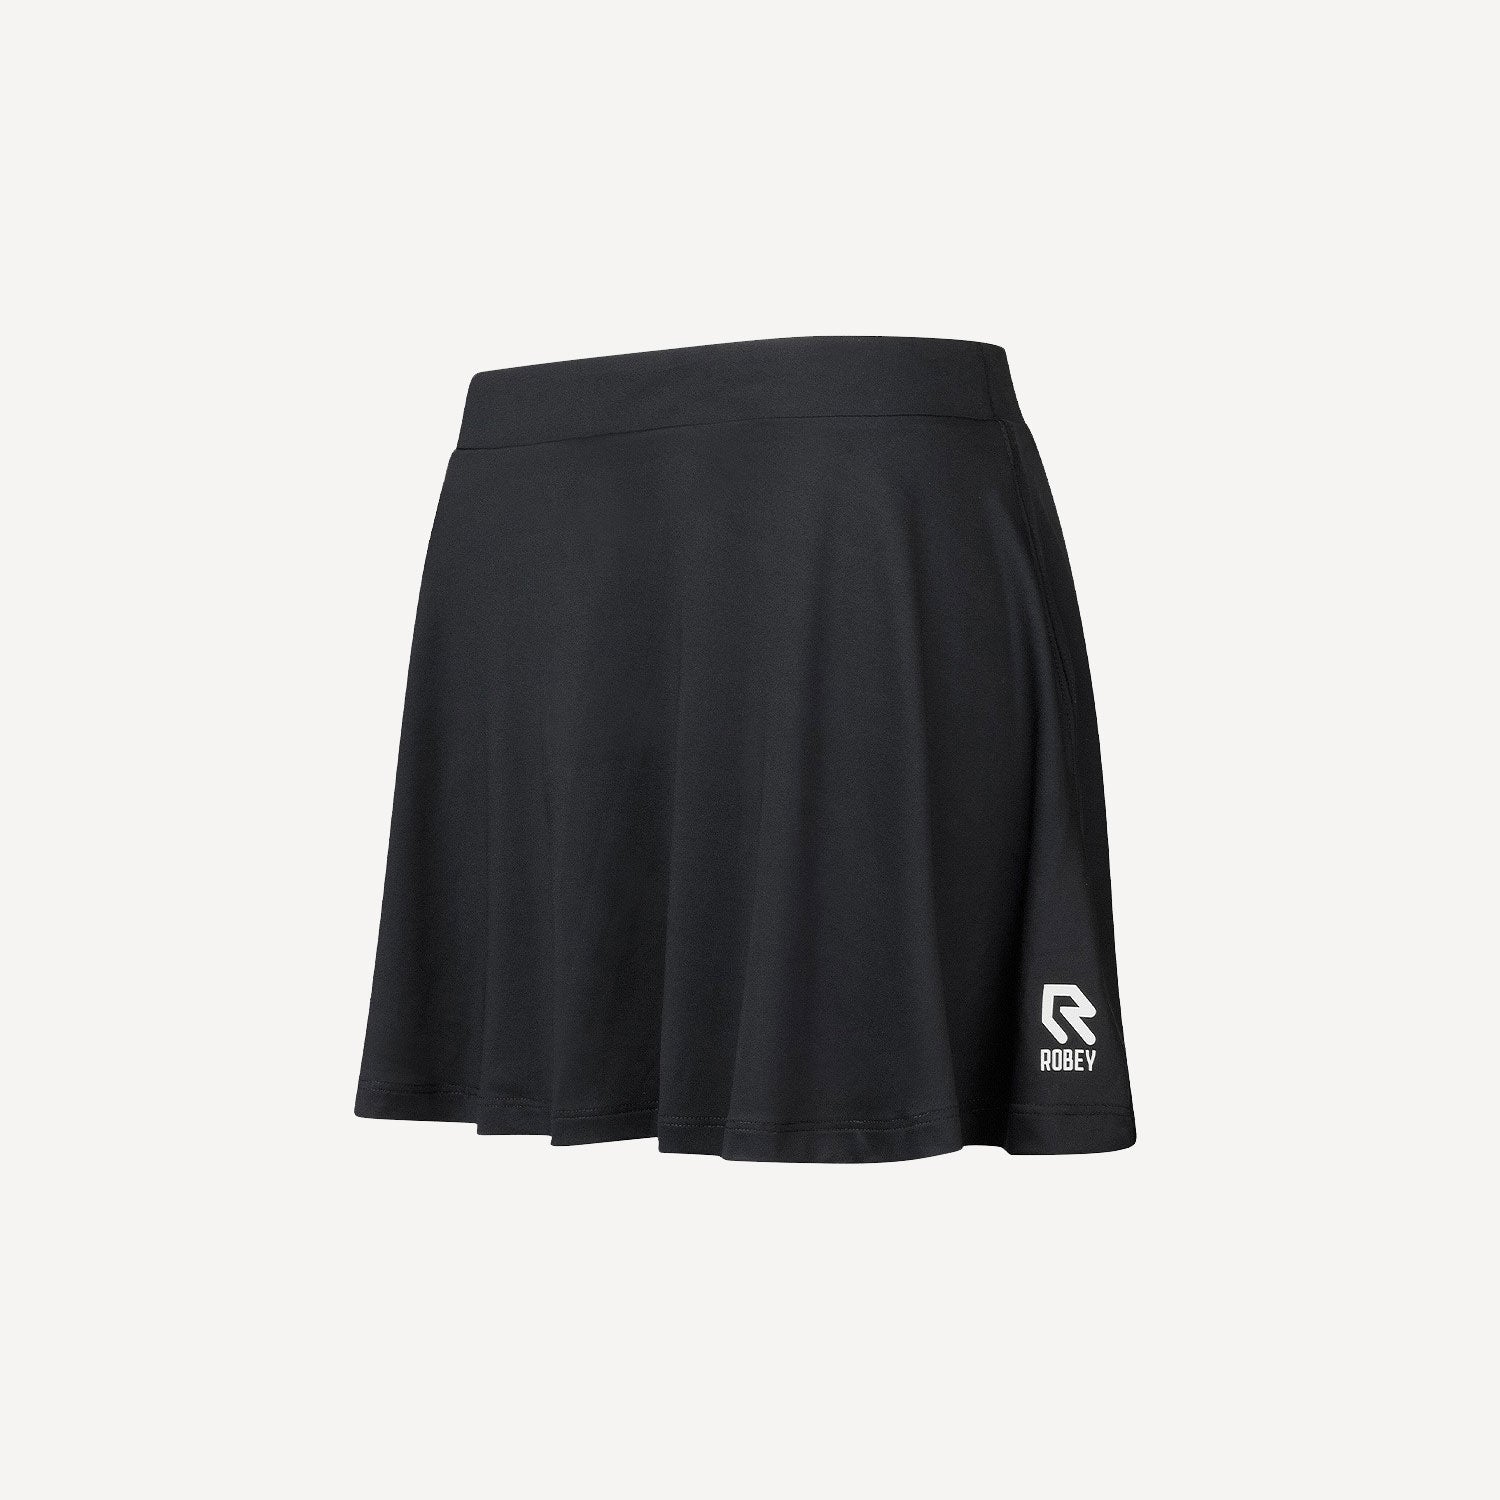 Robey Ralley Women's Tennis Skirt - Black (3)